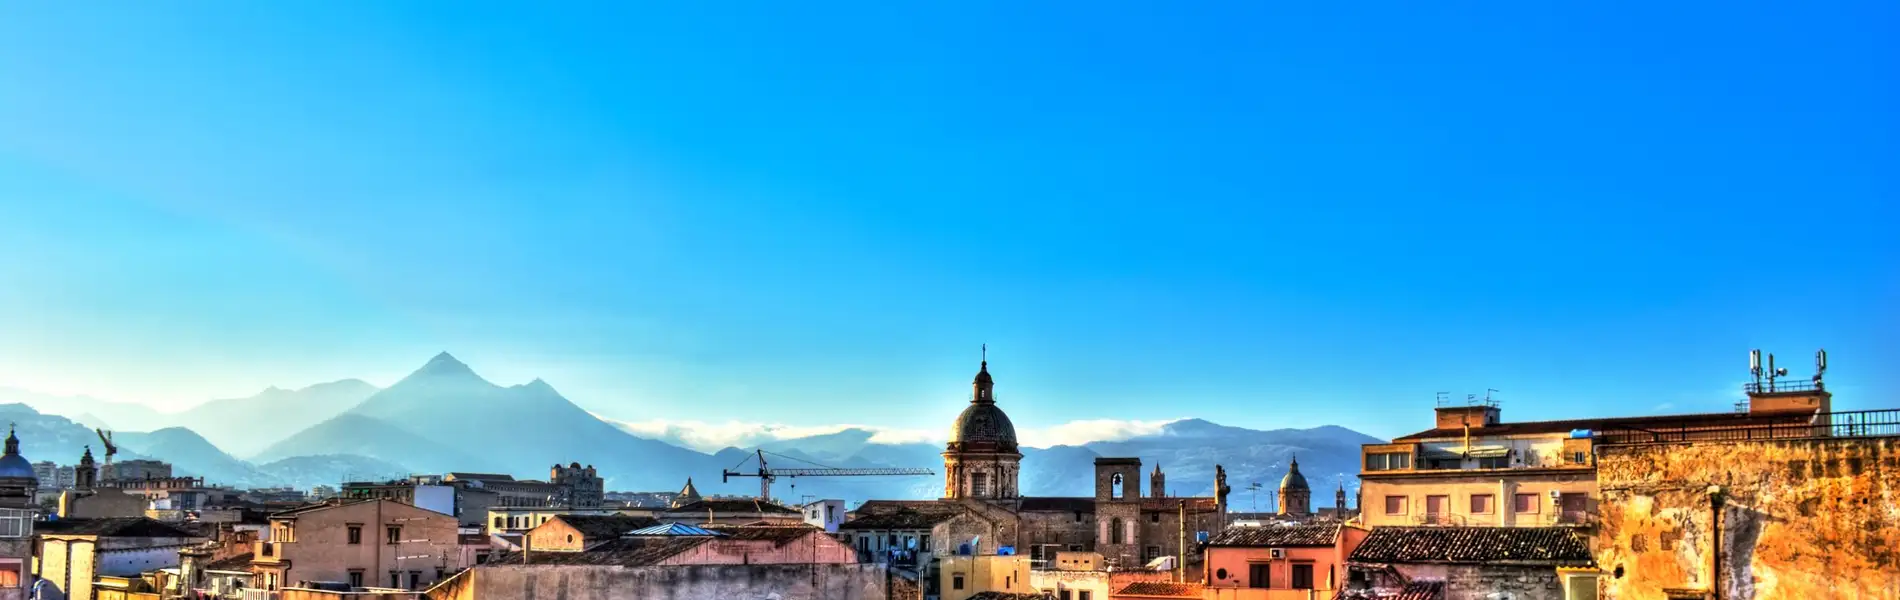 Palermo, Sicily (Italy)